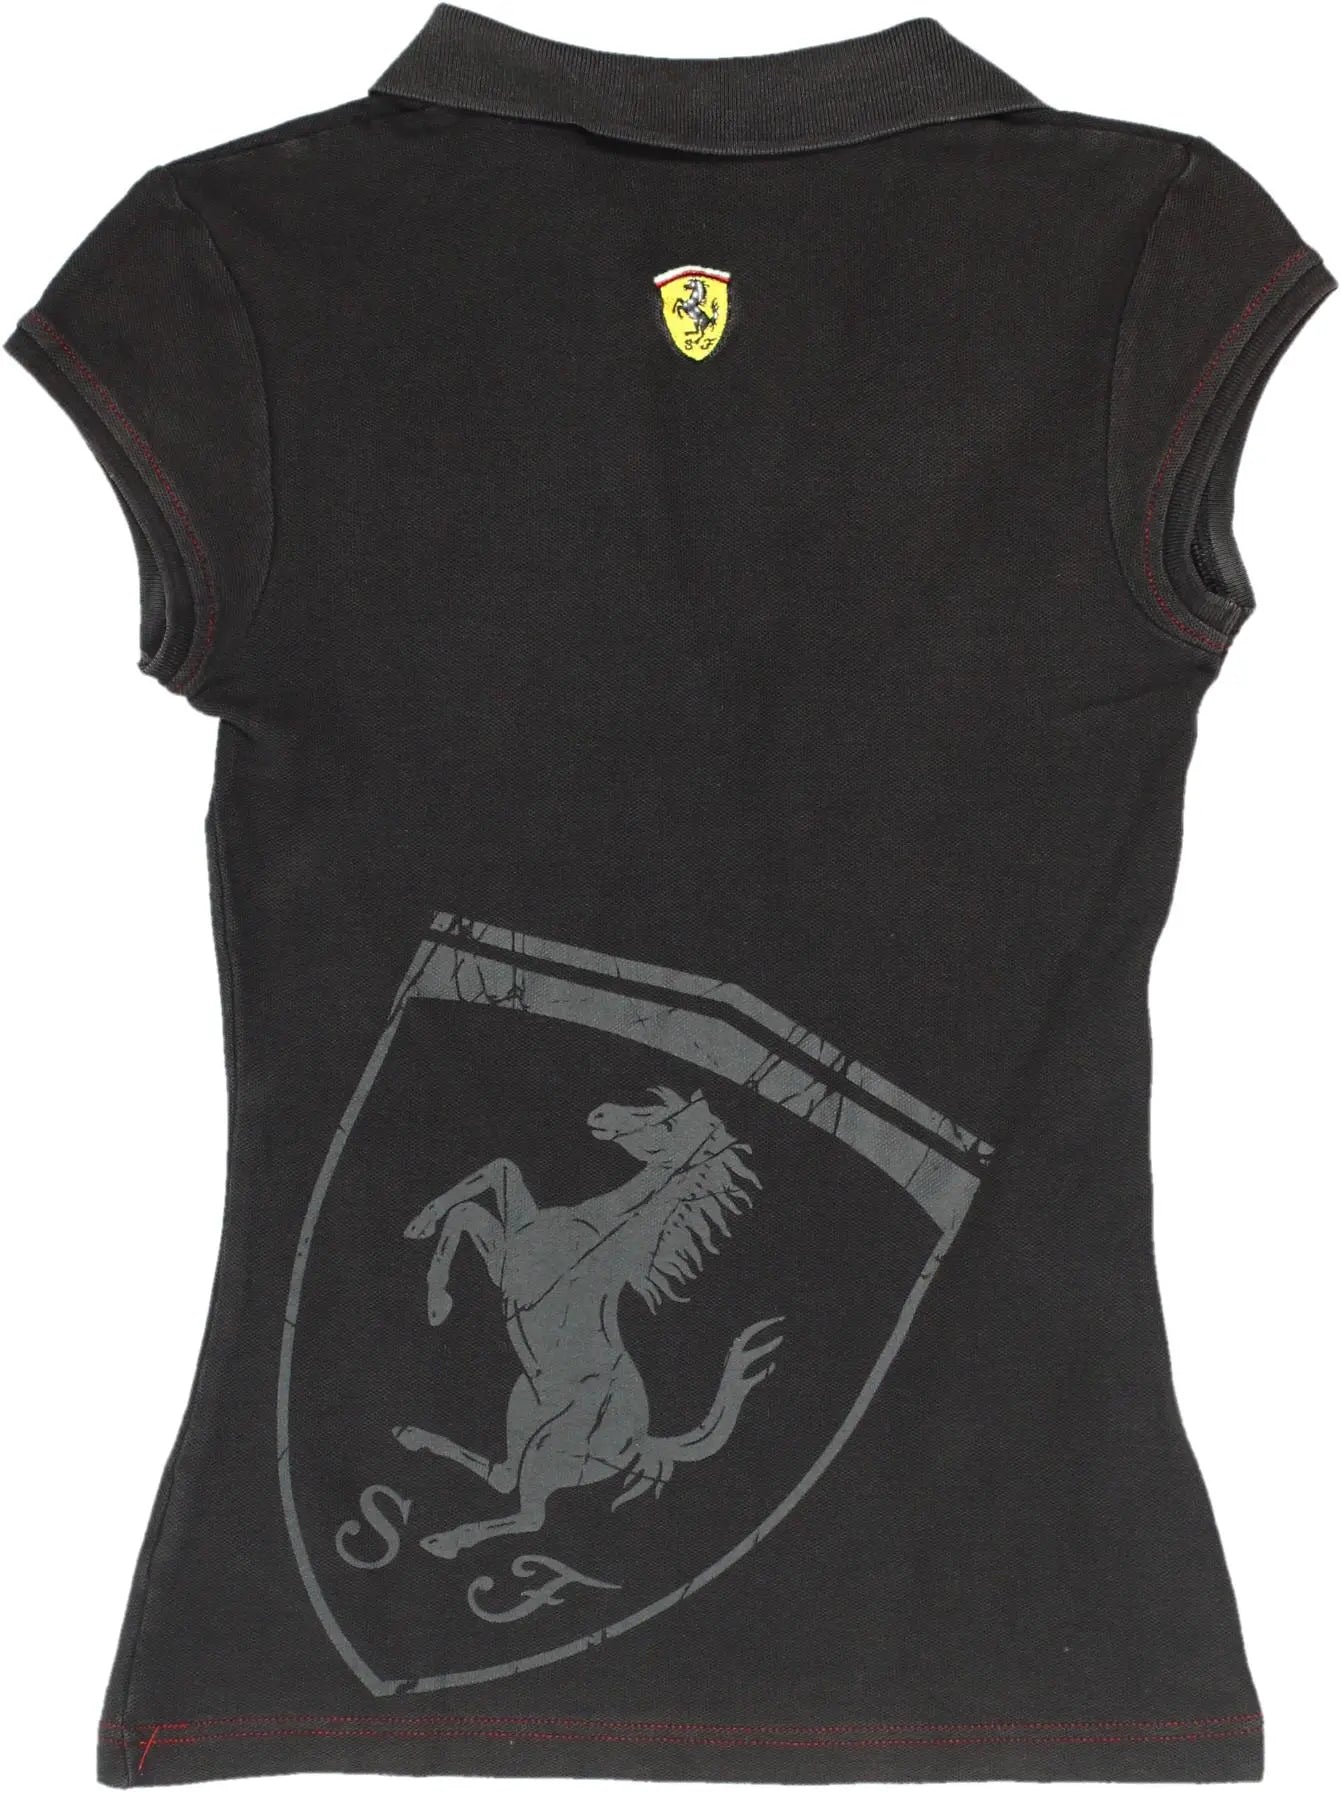 Puma - Ferrari Polo Shirt by Puma- ThriftTale.com - Vintage and second handclothing